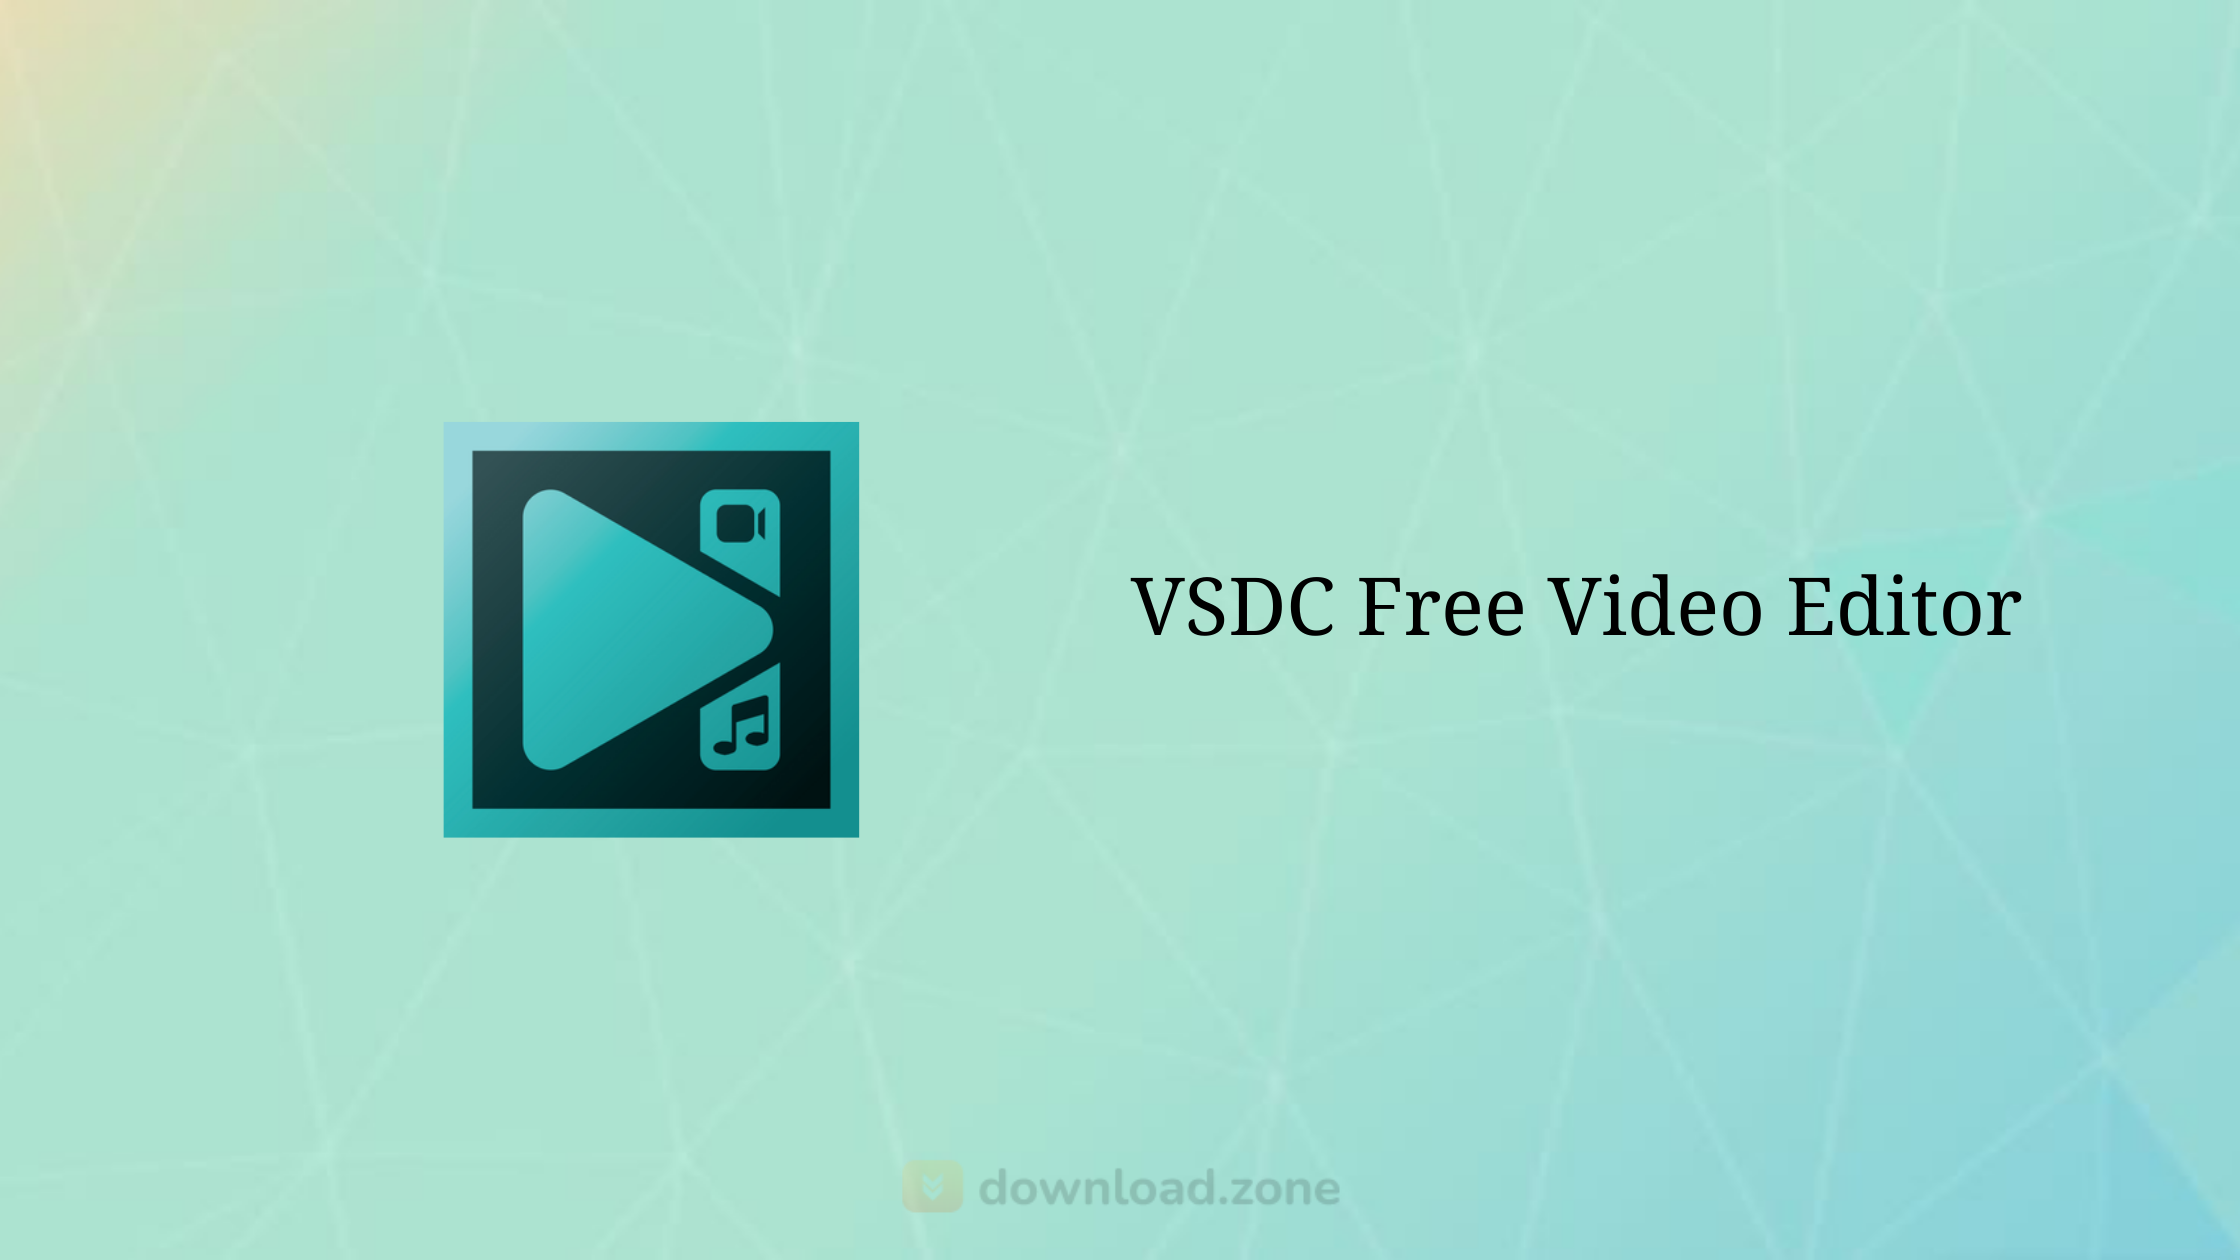 vsdc free video editor official website